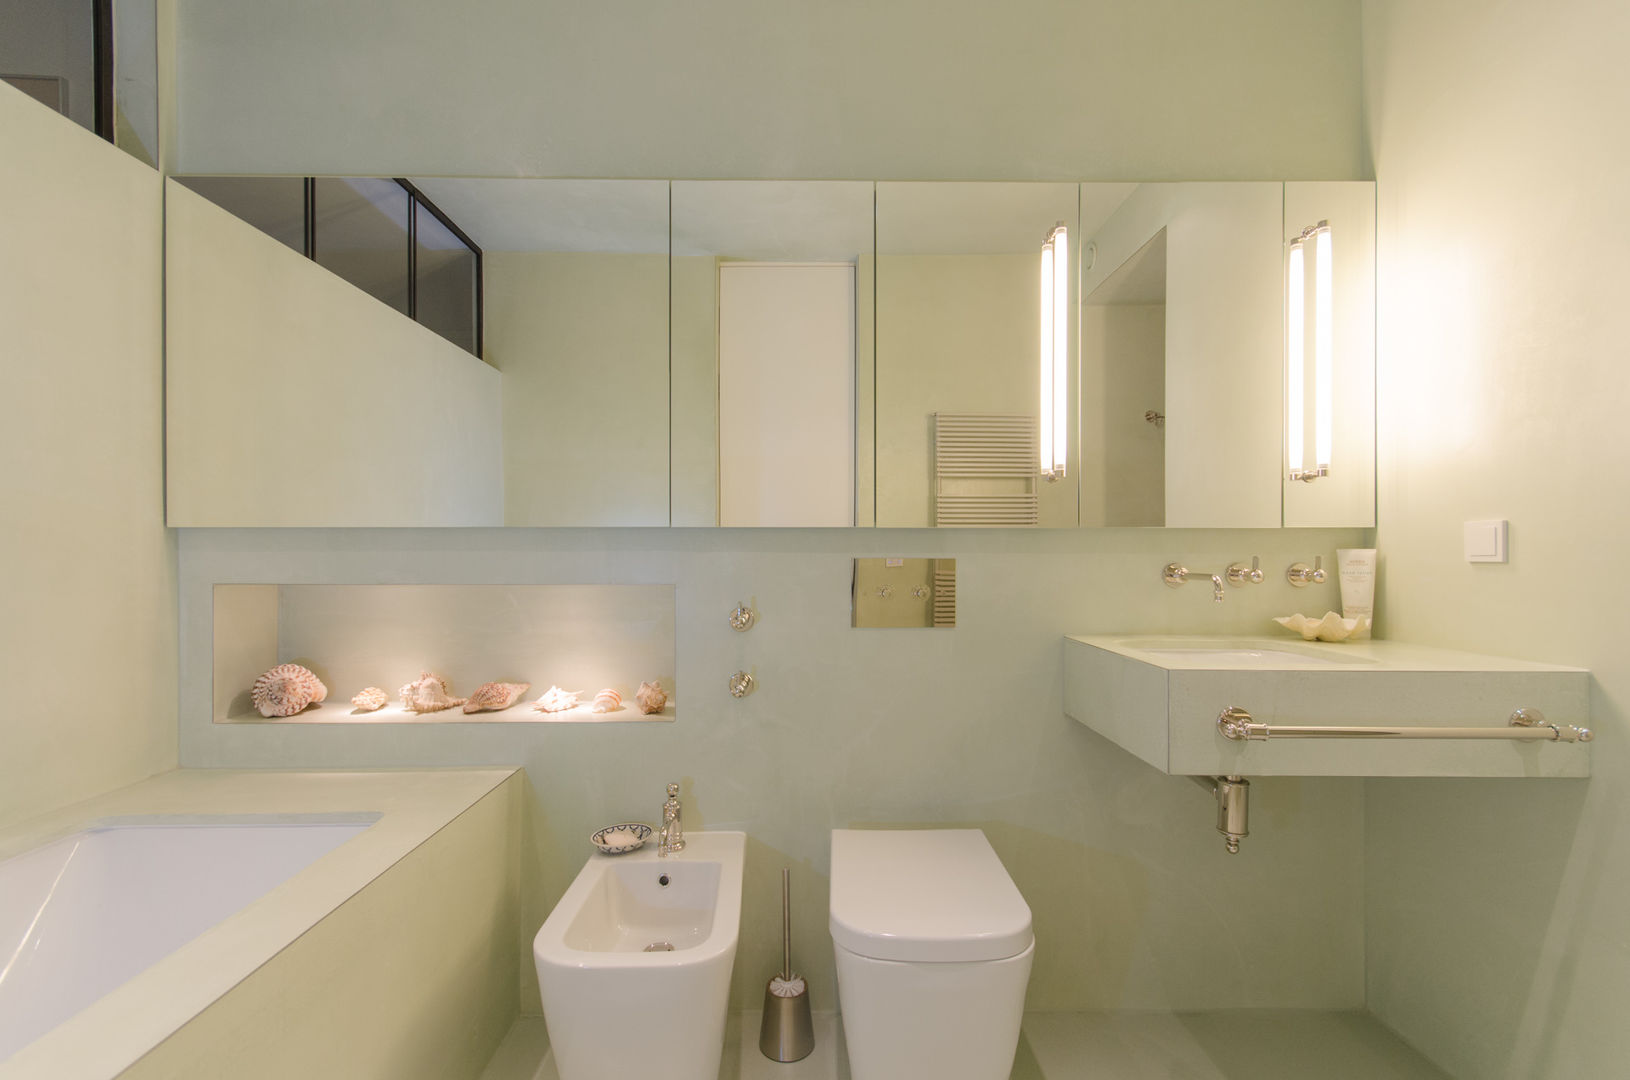 Fresh Mint Aura Vivante Bagno moderno bathroom,design,modern,lights,renovation,remodeling,badezimmer